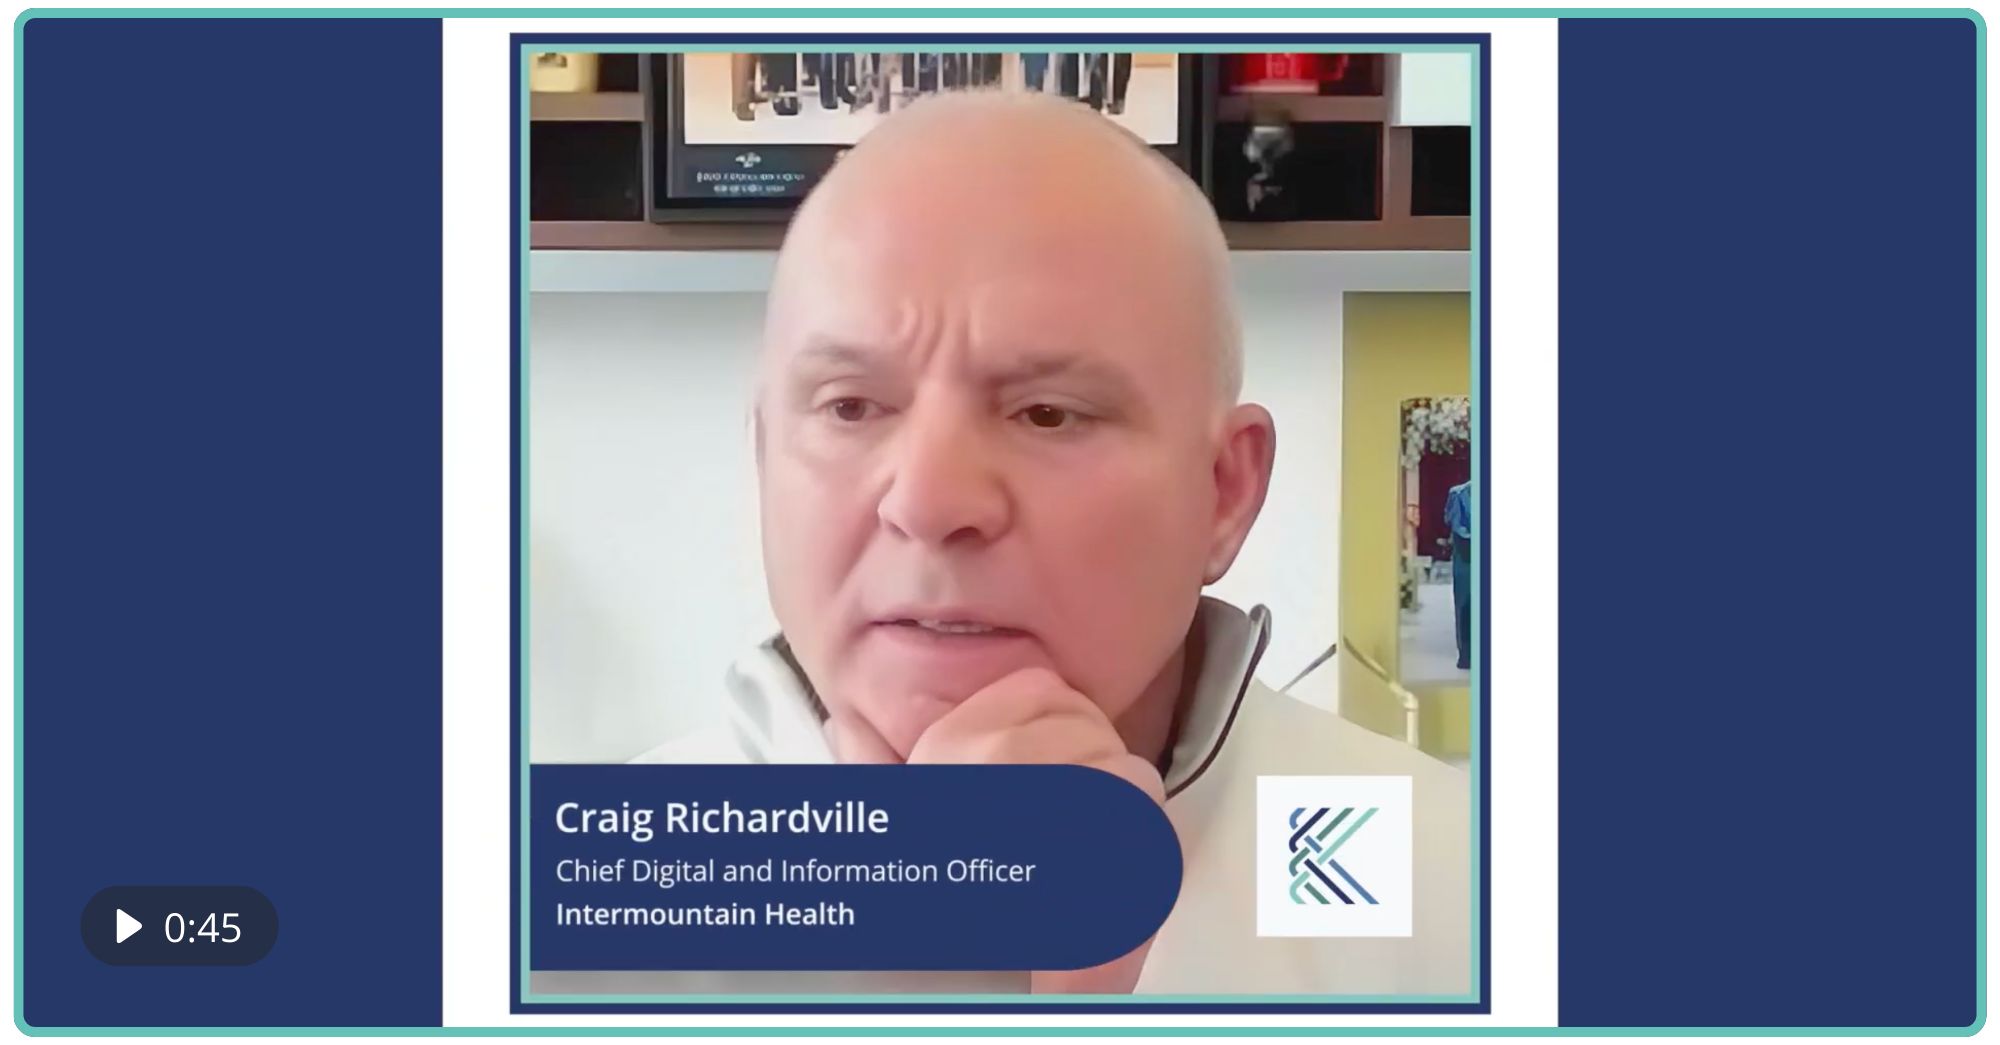 Craig Richardville on Provider Data Management for Intermountain Health